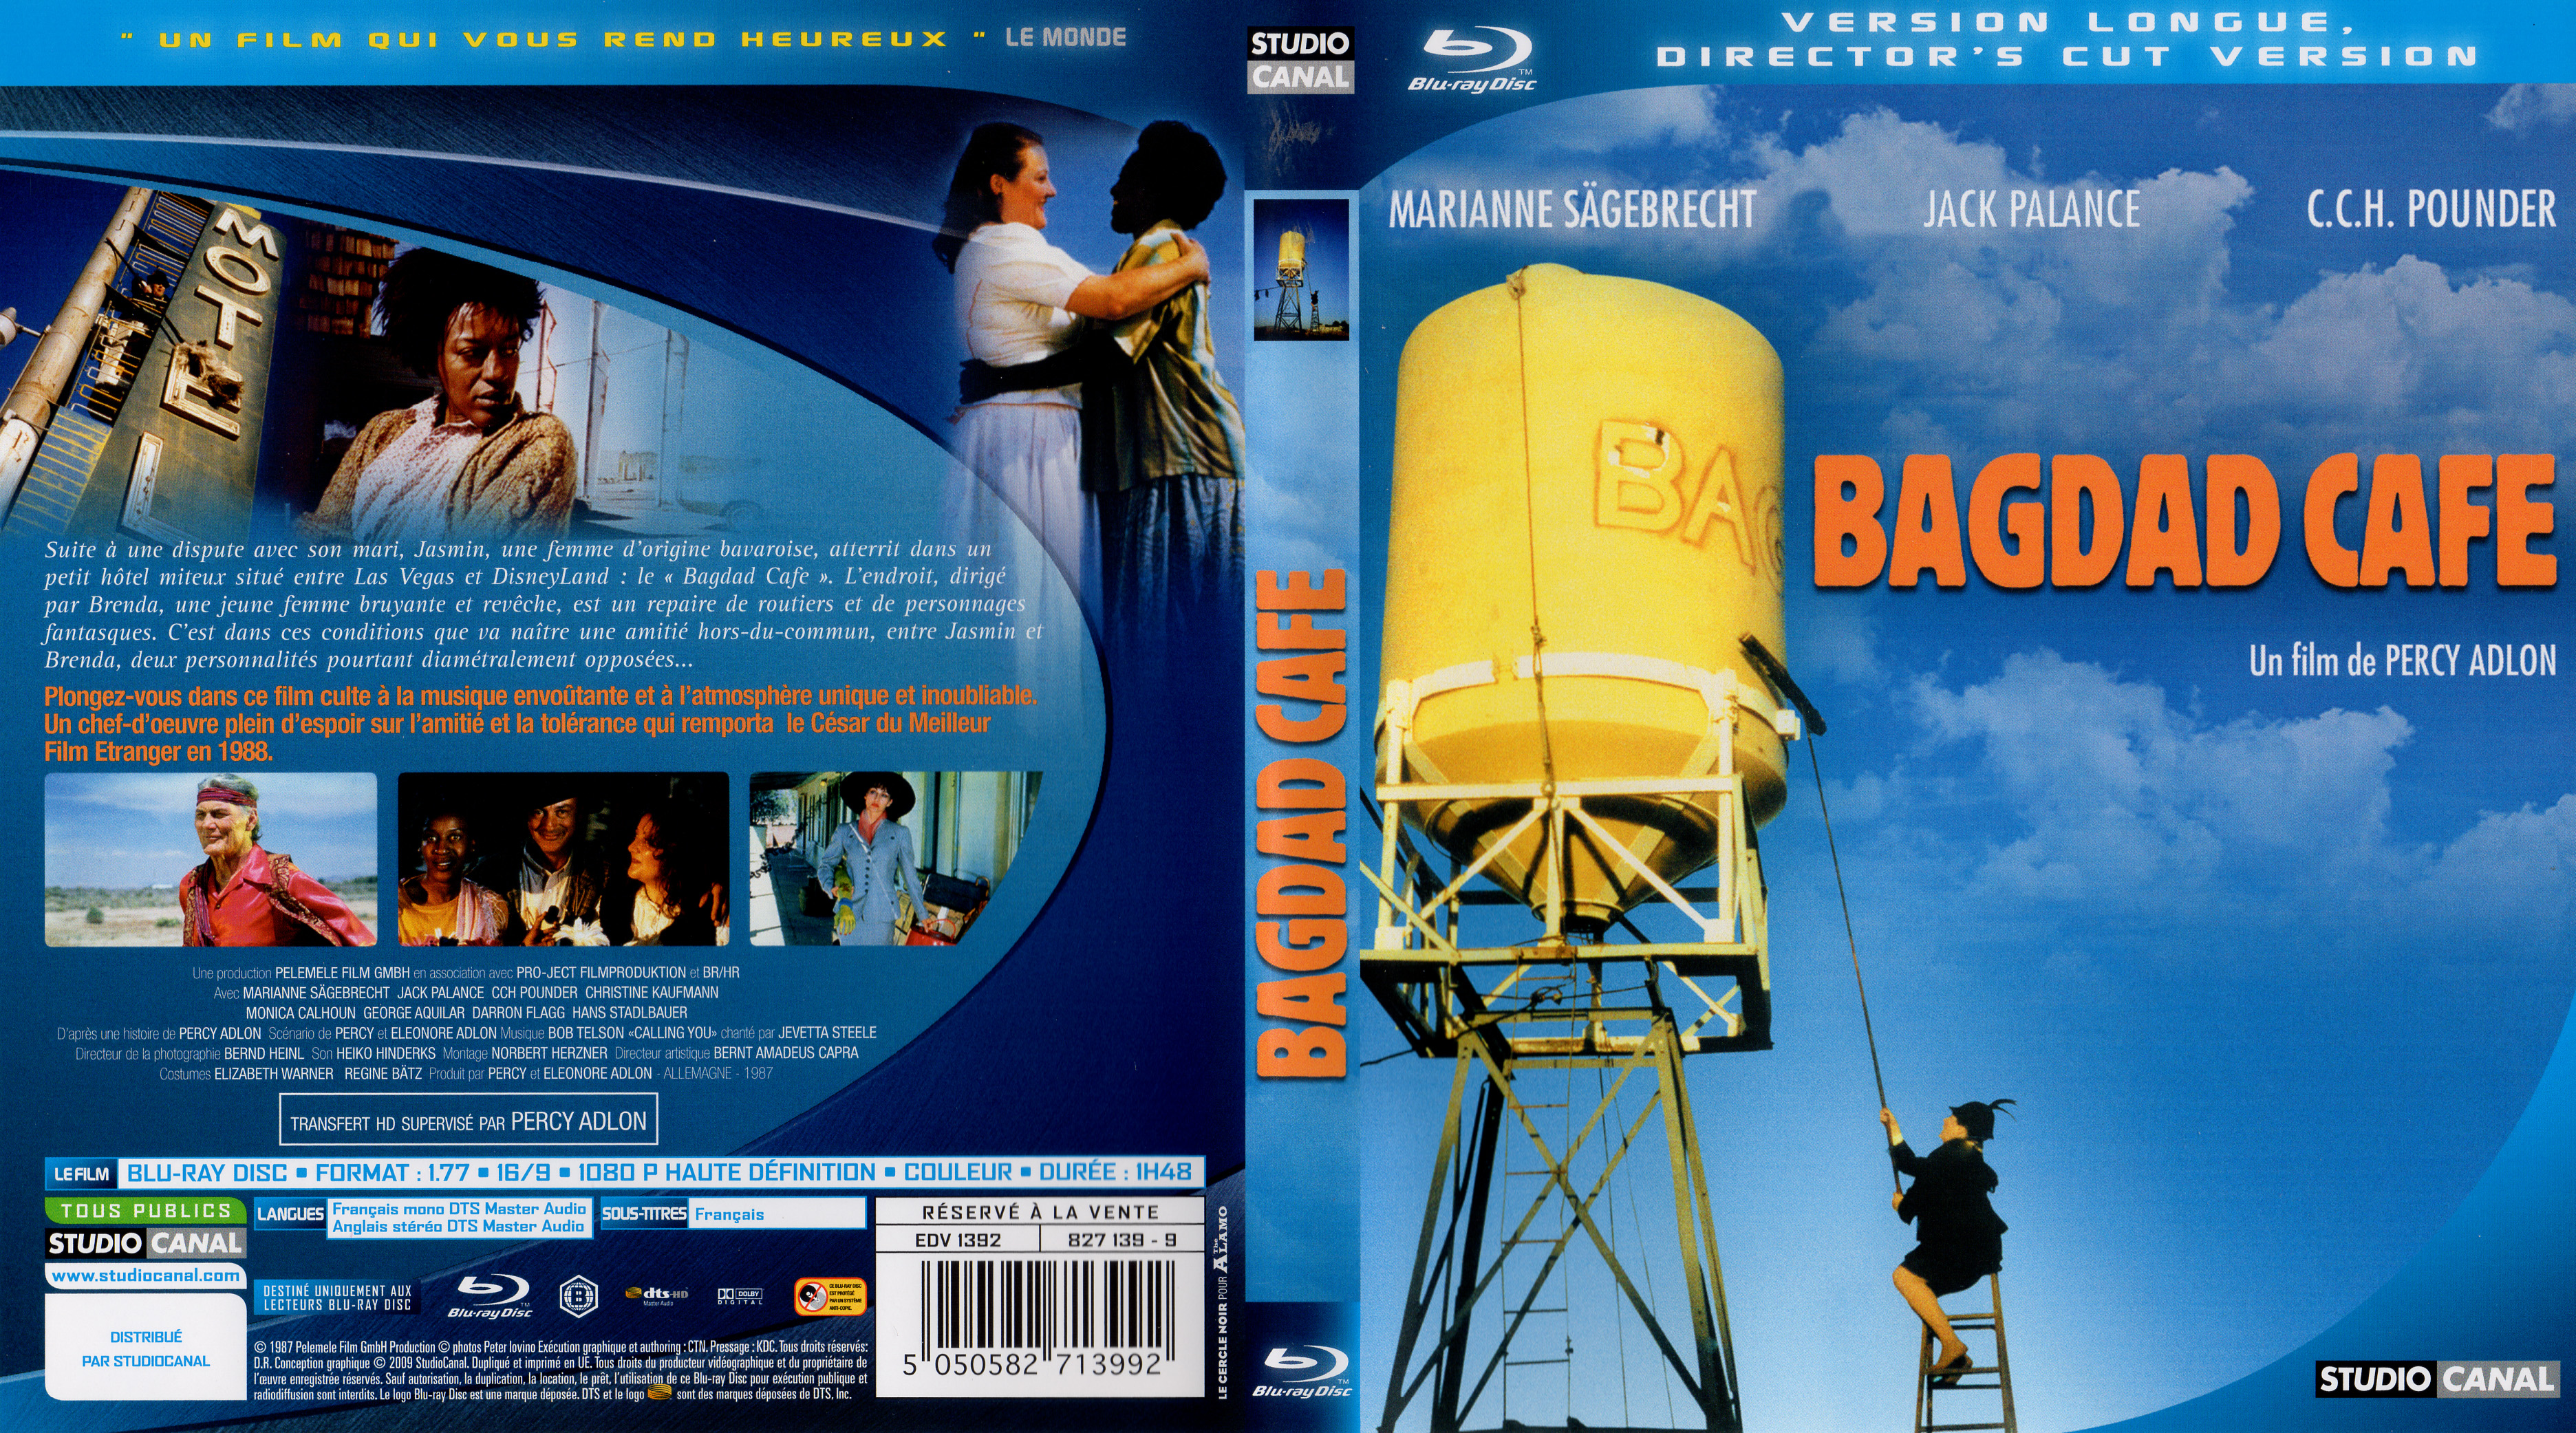 Jaquette DVD Bagdad caf (BLU-RAY)